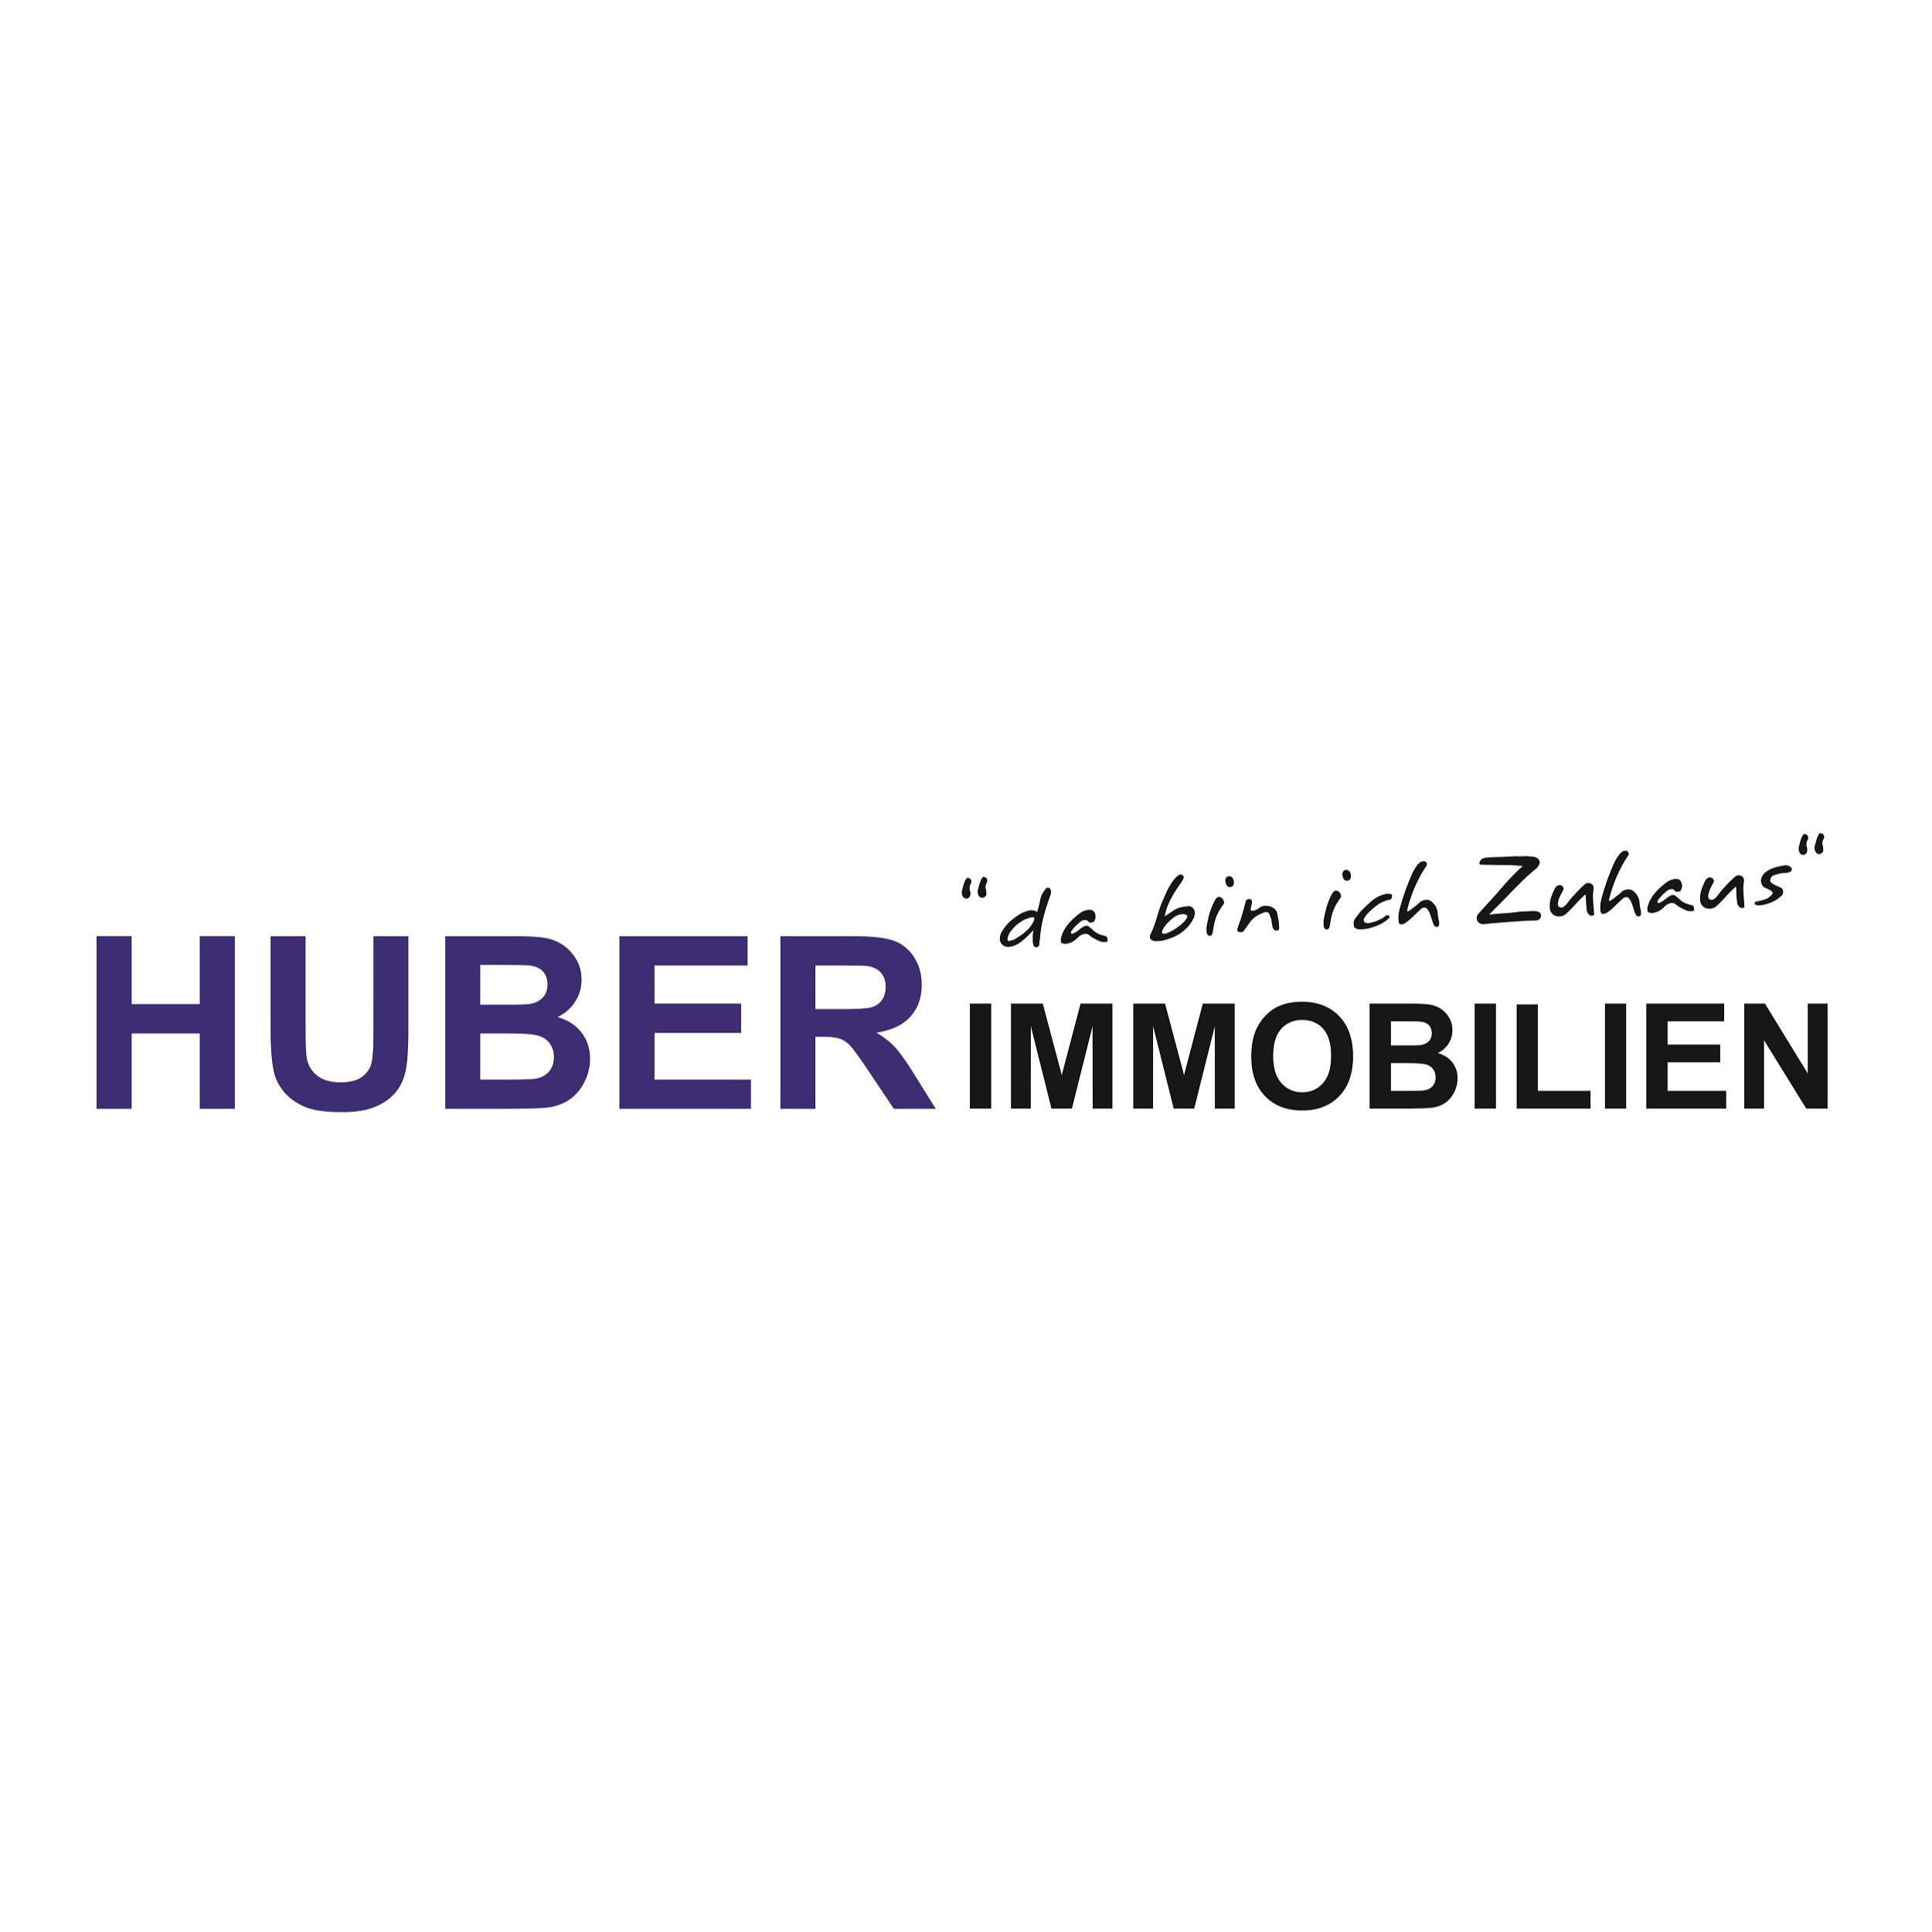 Huber Immobilien in 4212 Neumarkt im Mühlkreis Logo